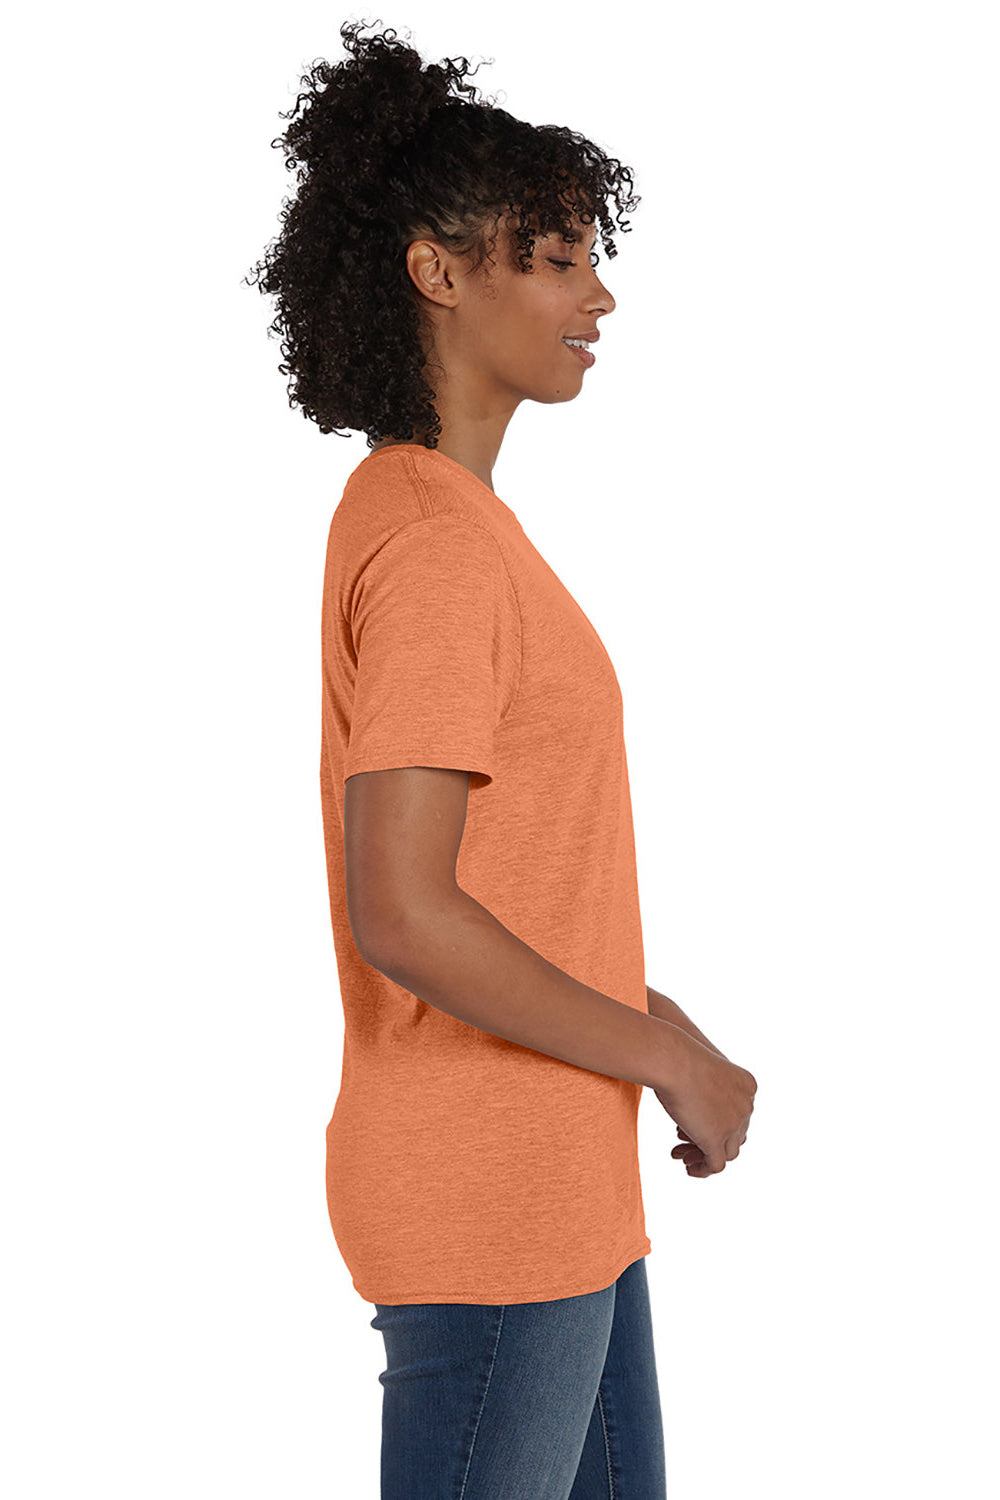 Hanes 4980 Mens Nano-T Short Sleeve Crewneck T-Shirt Heather Pumpkin Orange SIde